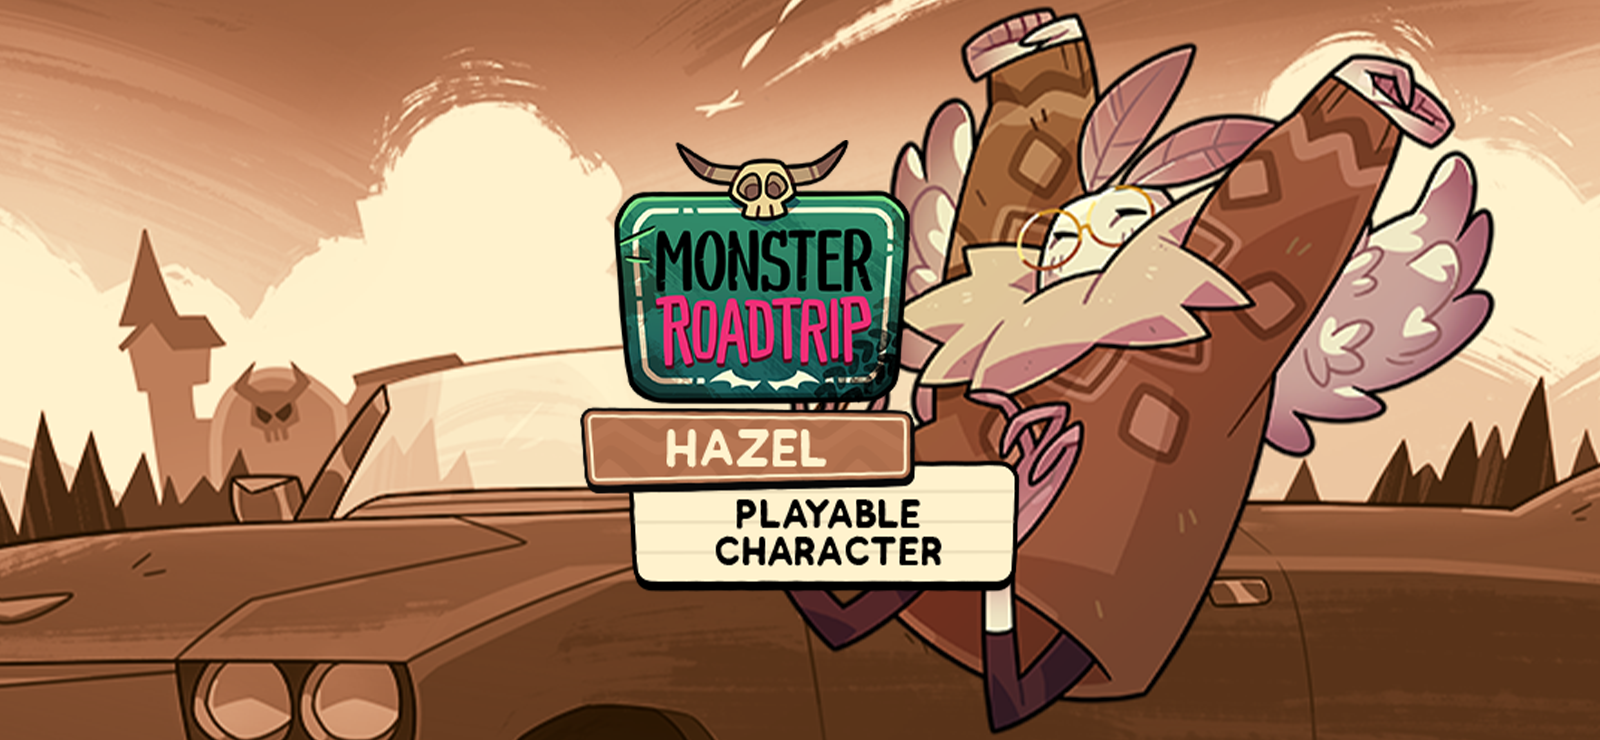 Monster Roadtrip - Playable Character - Hazel